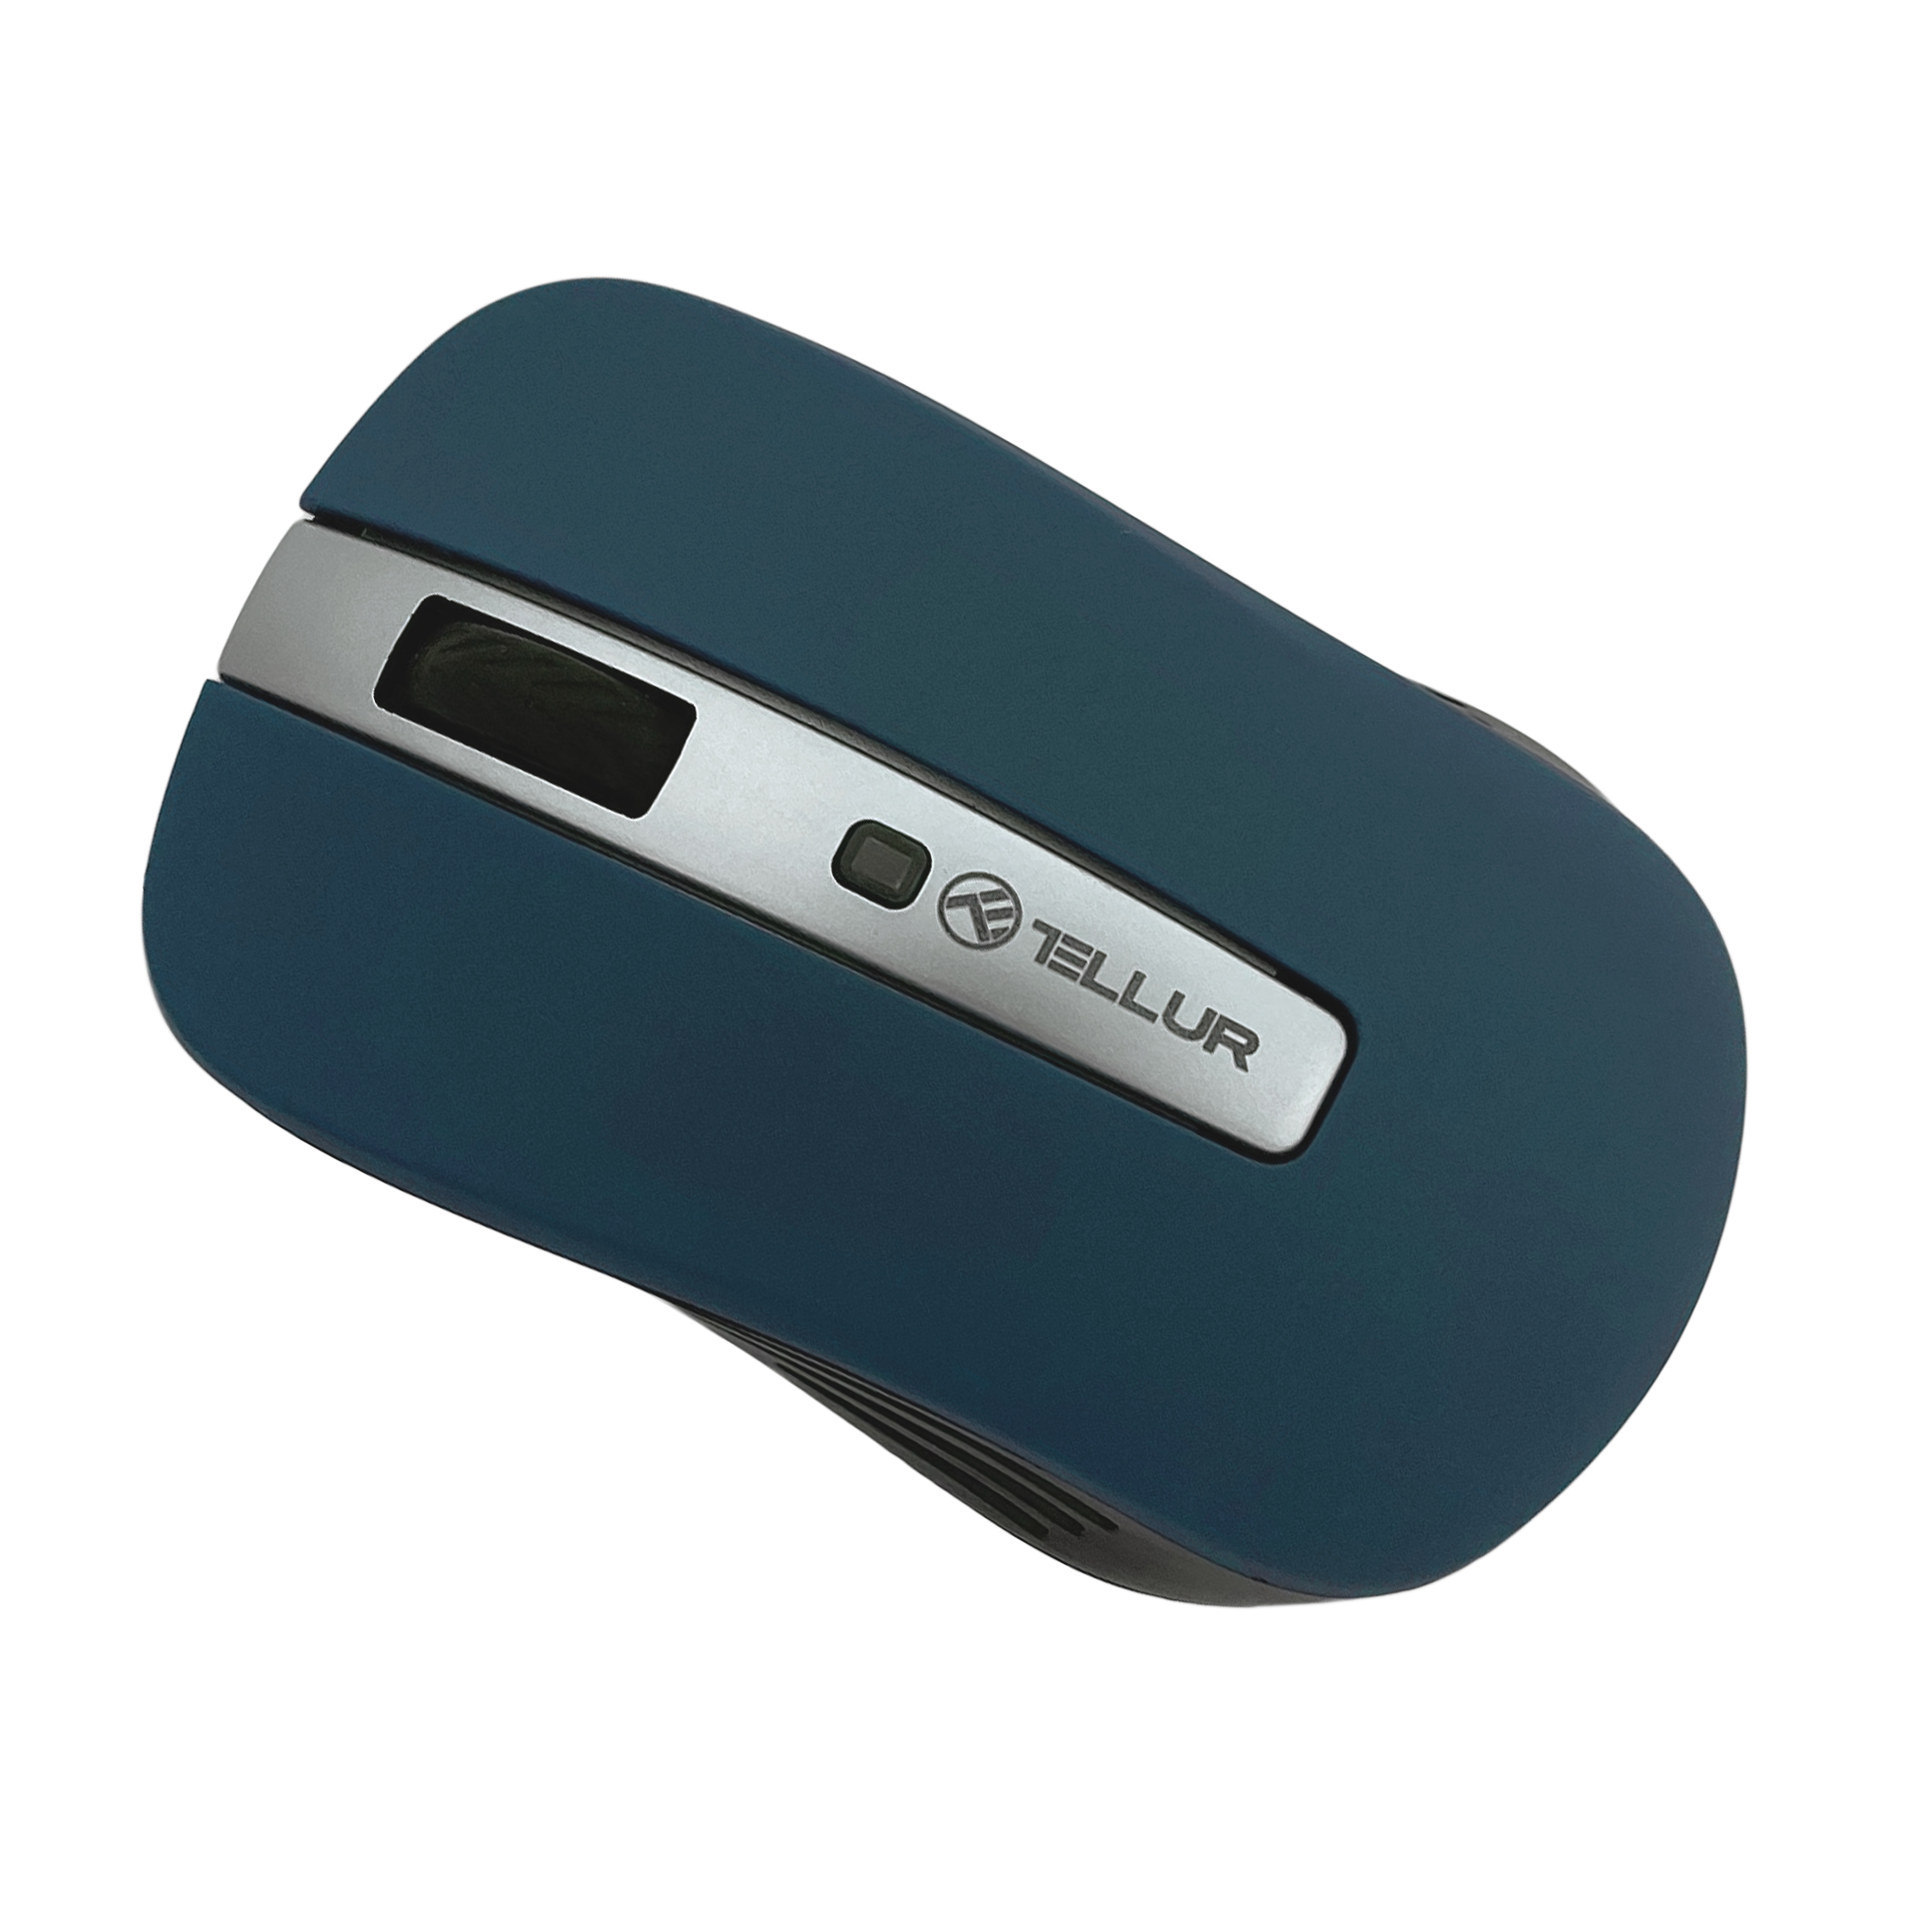 Mouse Wireless Tellur Basic, Plug and Play, LED, 800-1600 DPI reglabil, 4 Butoane, Albastru Inchis (închis) imagine Black Friday 2021